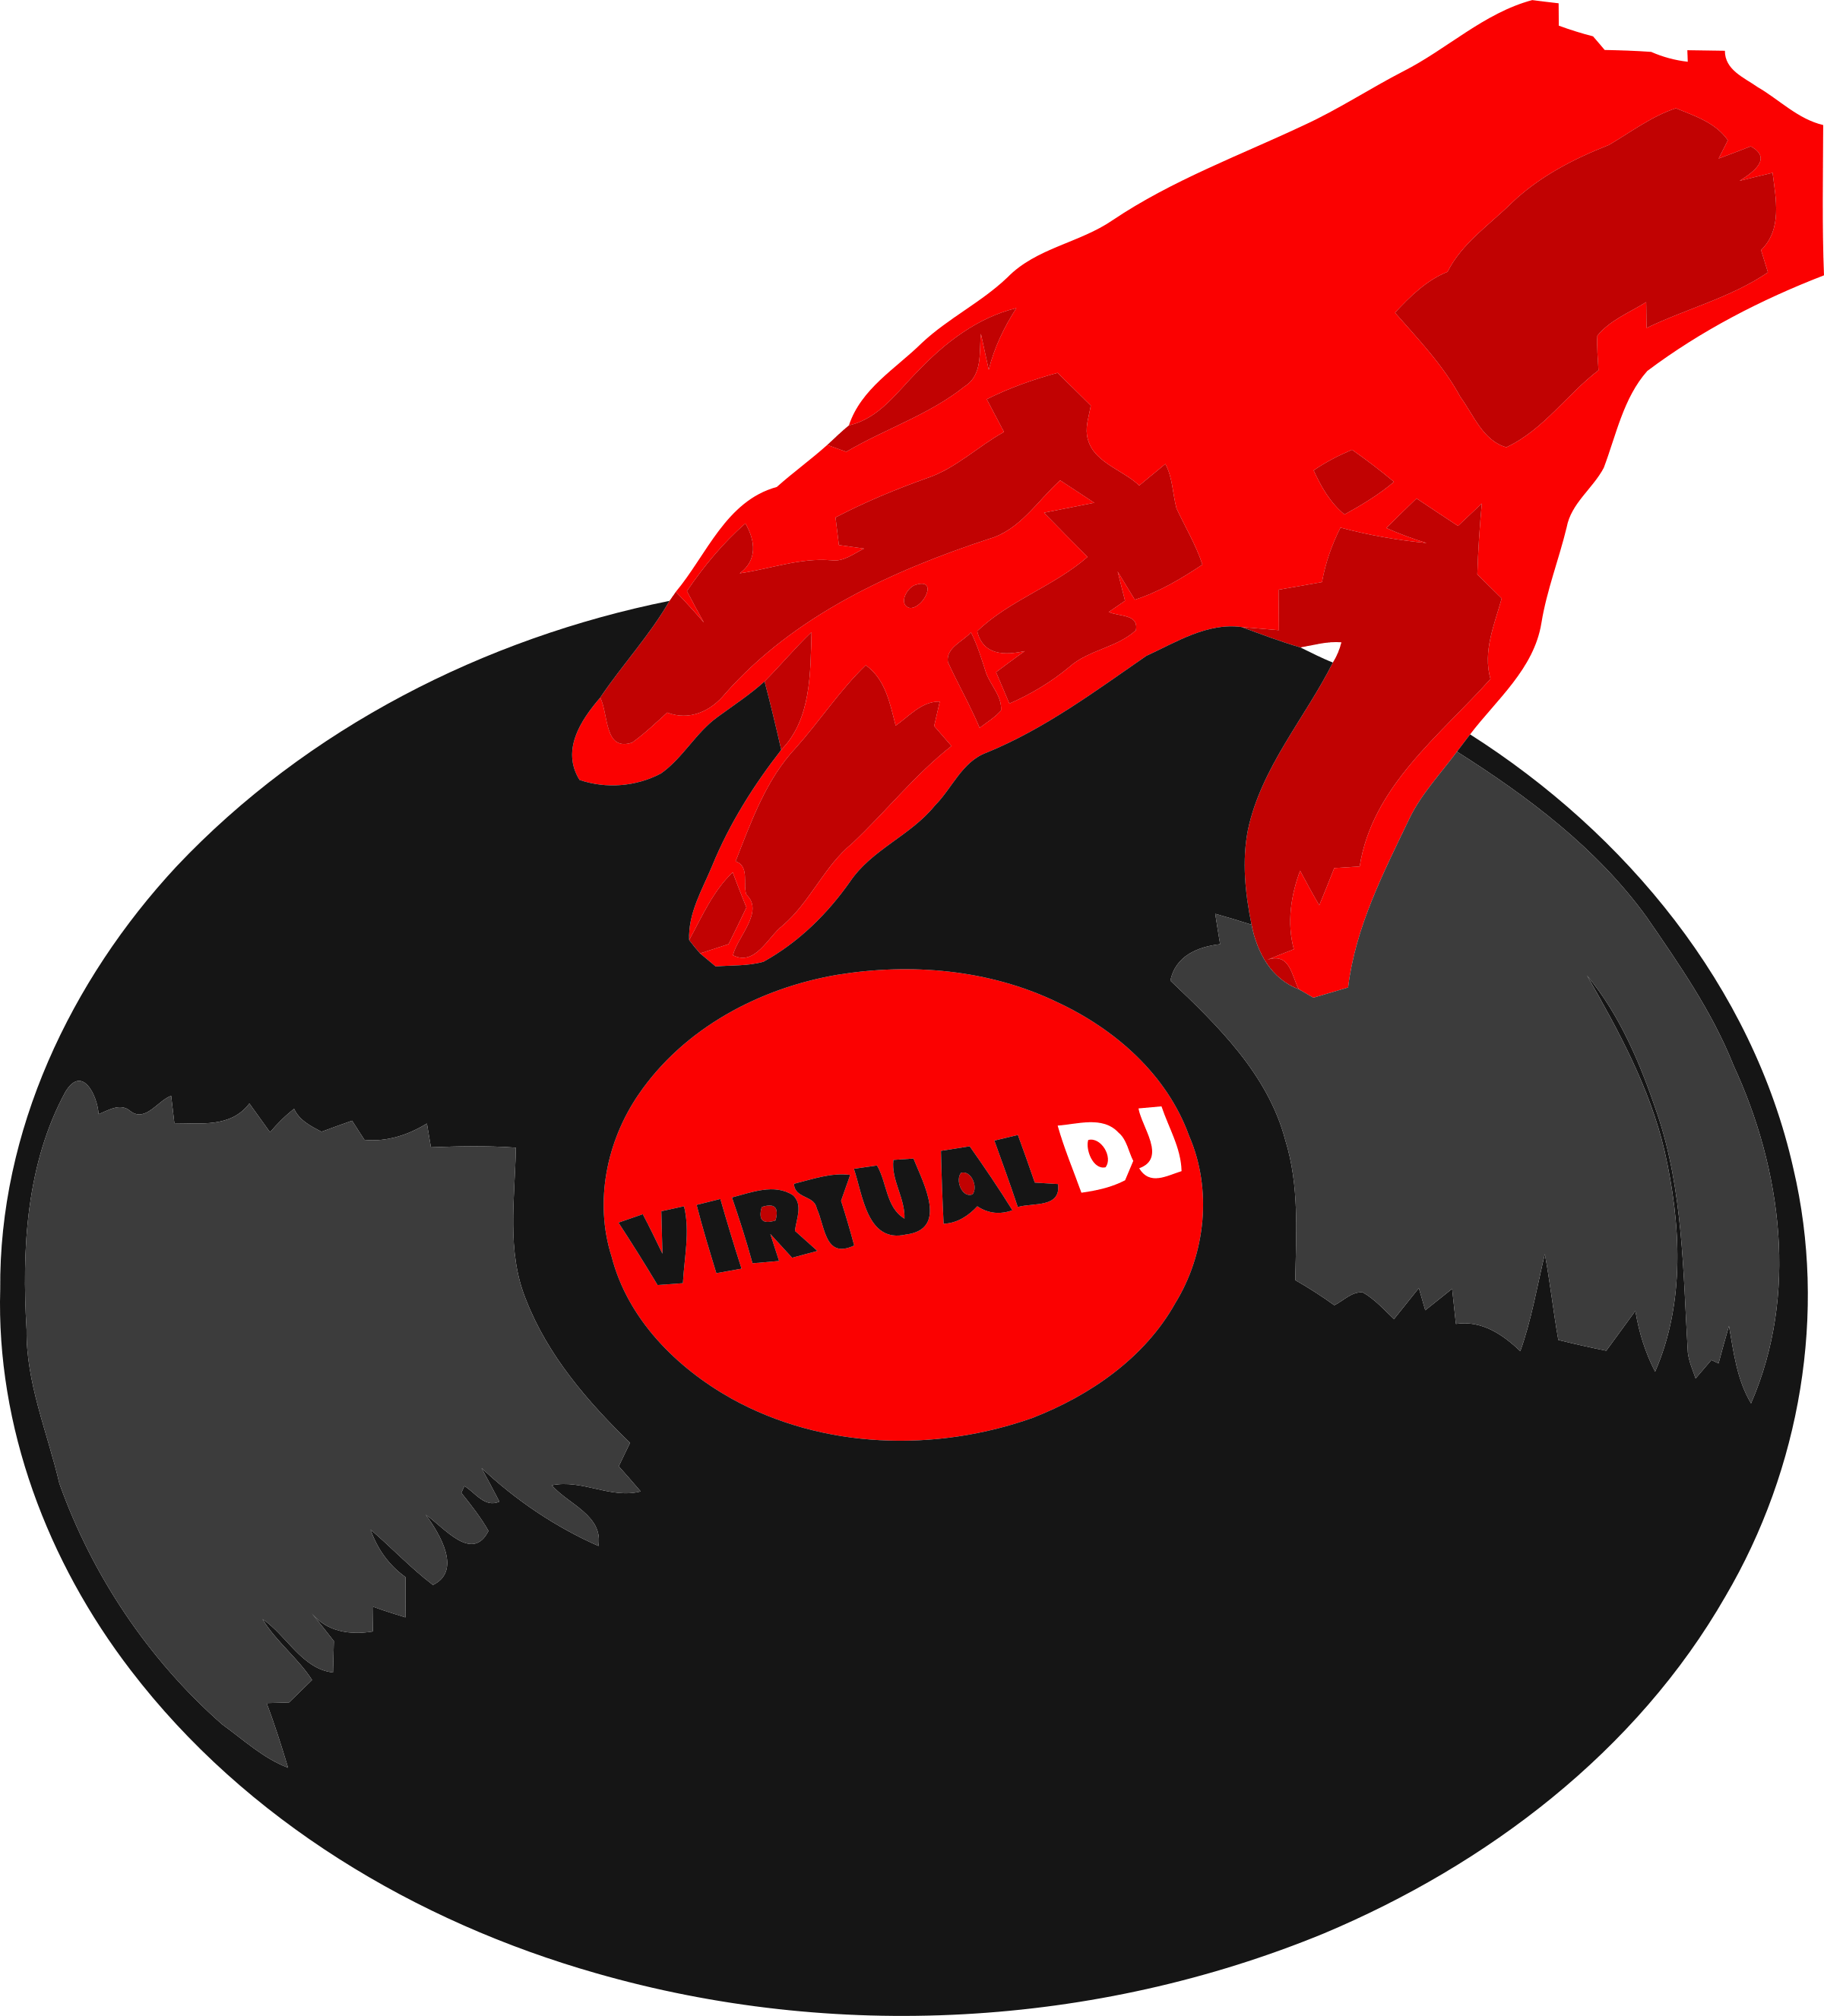 VirtualDJ Logo - Virtual DJ Logo PNG Transparent & SVG Vector - Freebie Supply